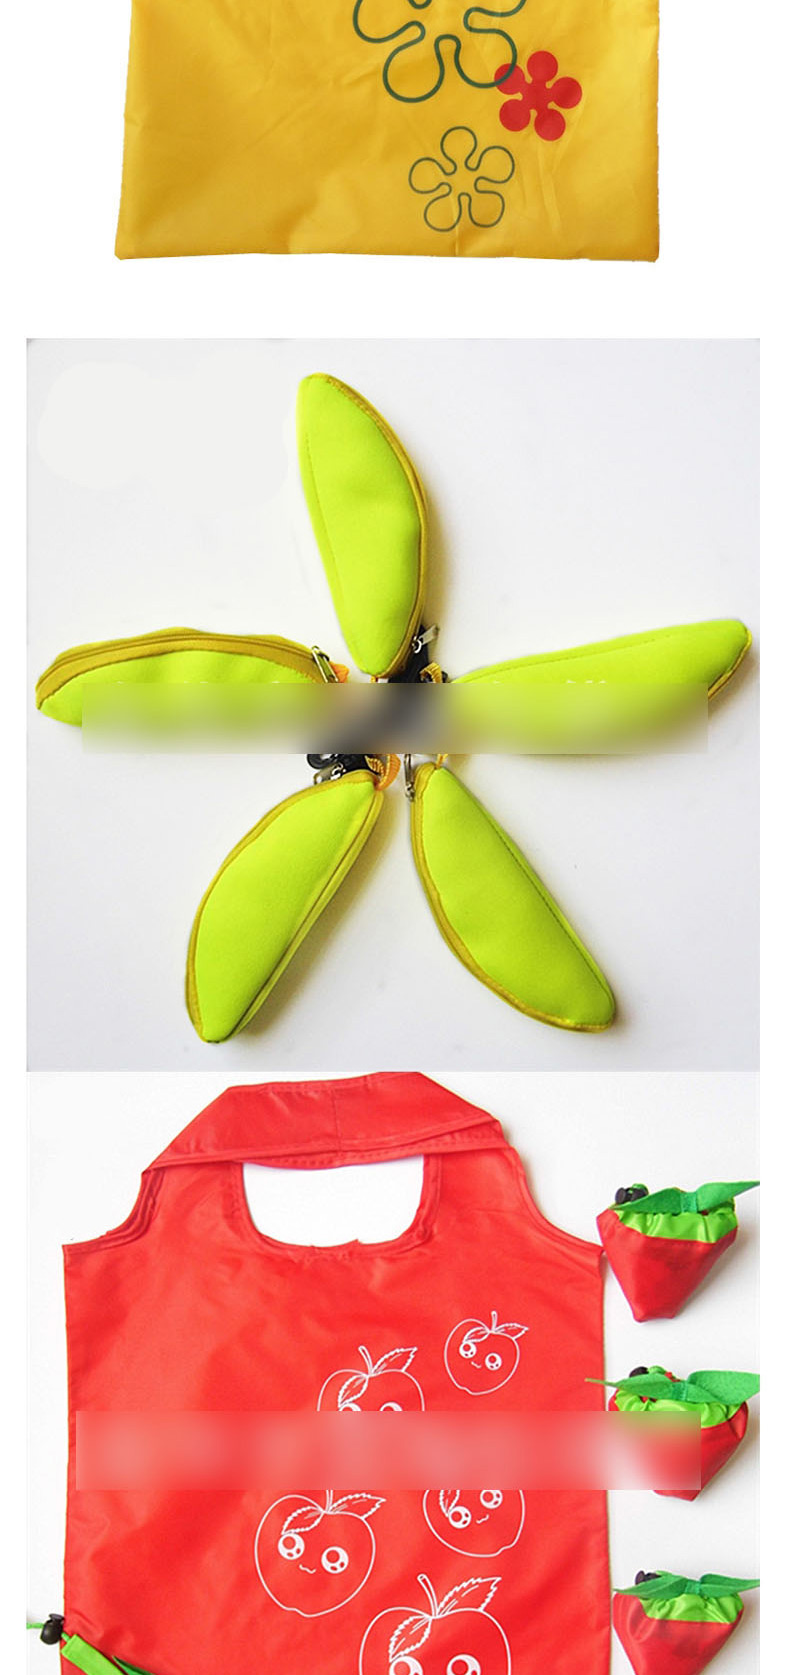 Fashion Kiwi Polyester Folded Fruit Green Bag Shopping Bag,Handbags